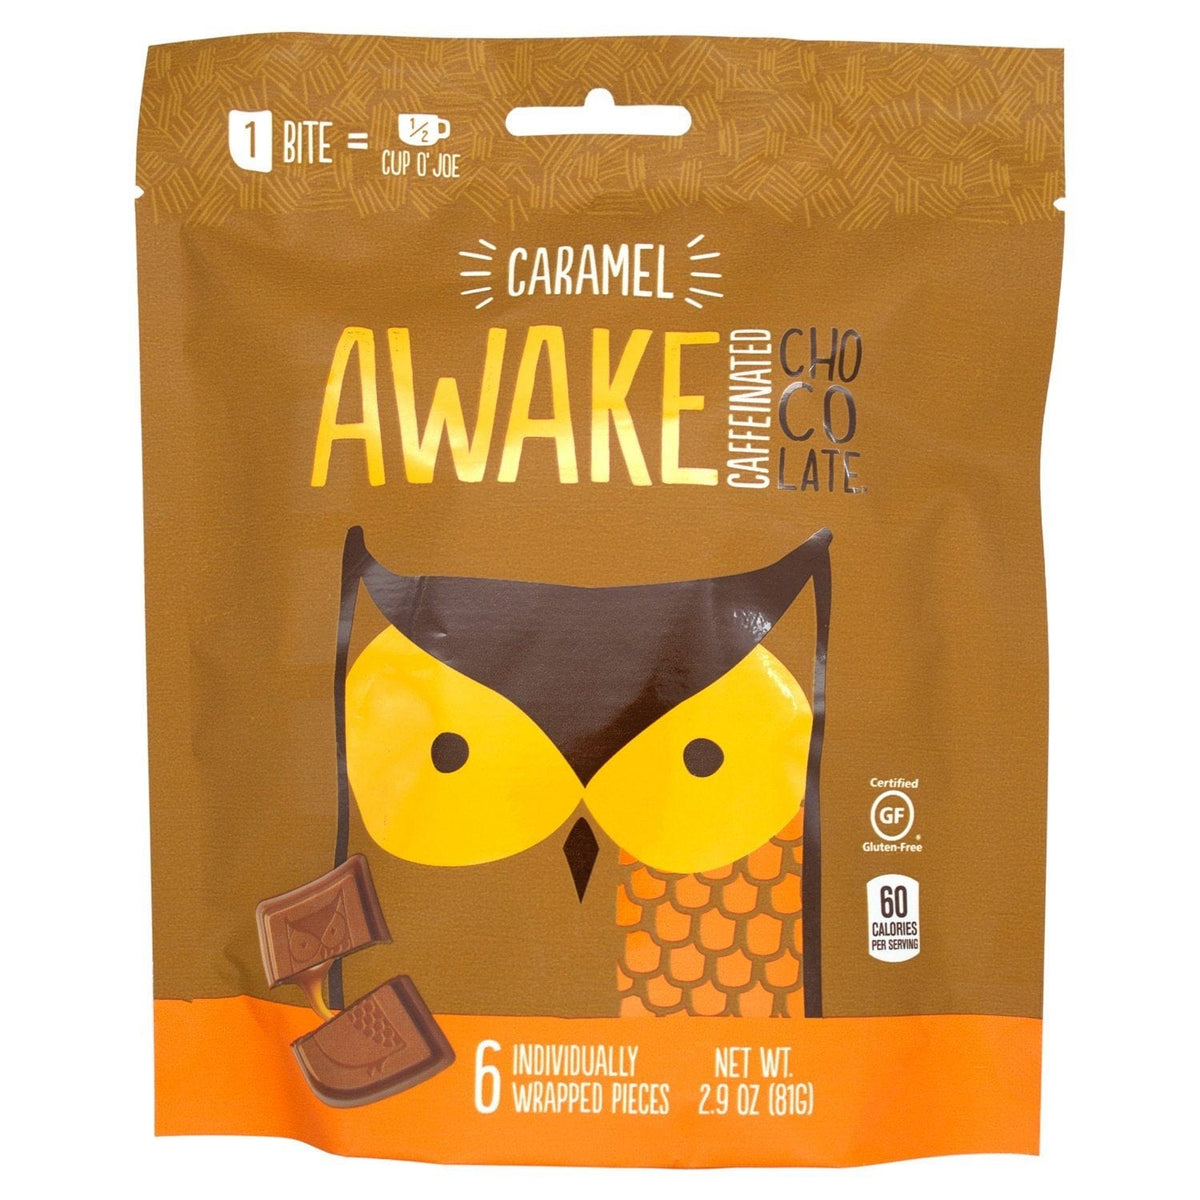 Lolli and Pops Classic Awake Caramel Chocolate Bites Bag